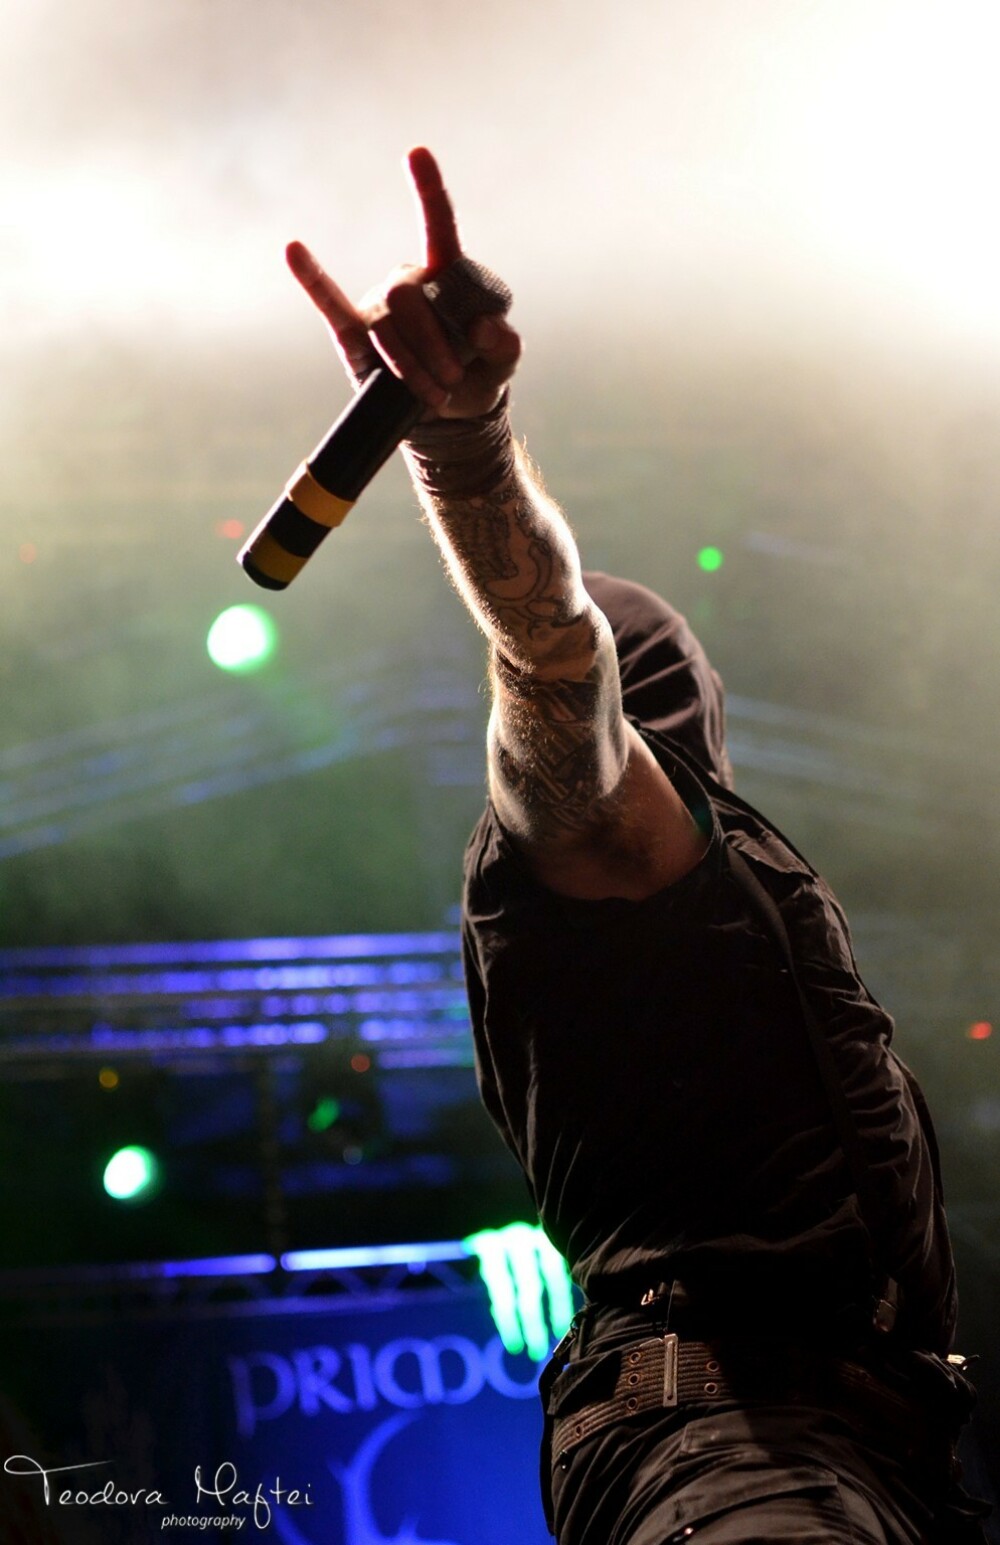 Rockstadt Extreme Fest 2013 – 3 zile de libertate in munti si concerte rock. GALERIE FOTO - Imaginea 10